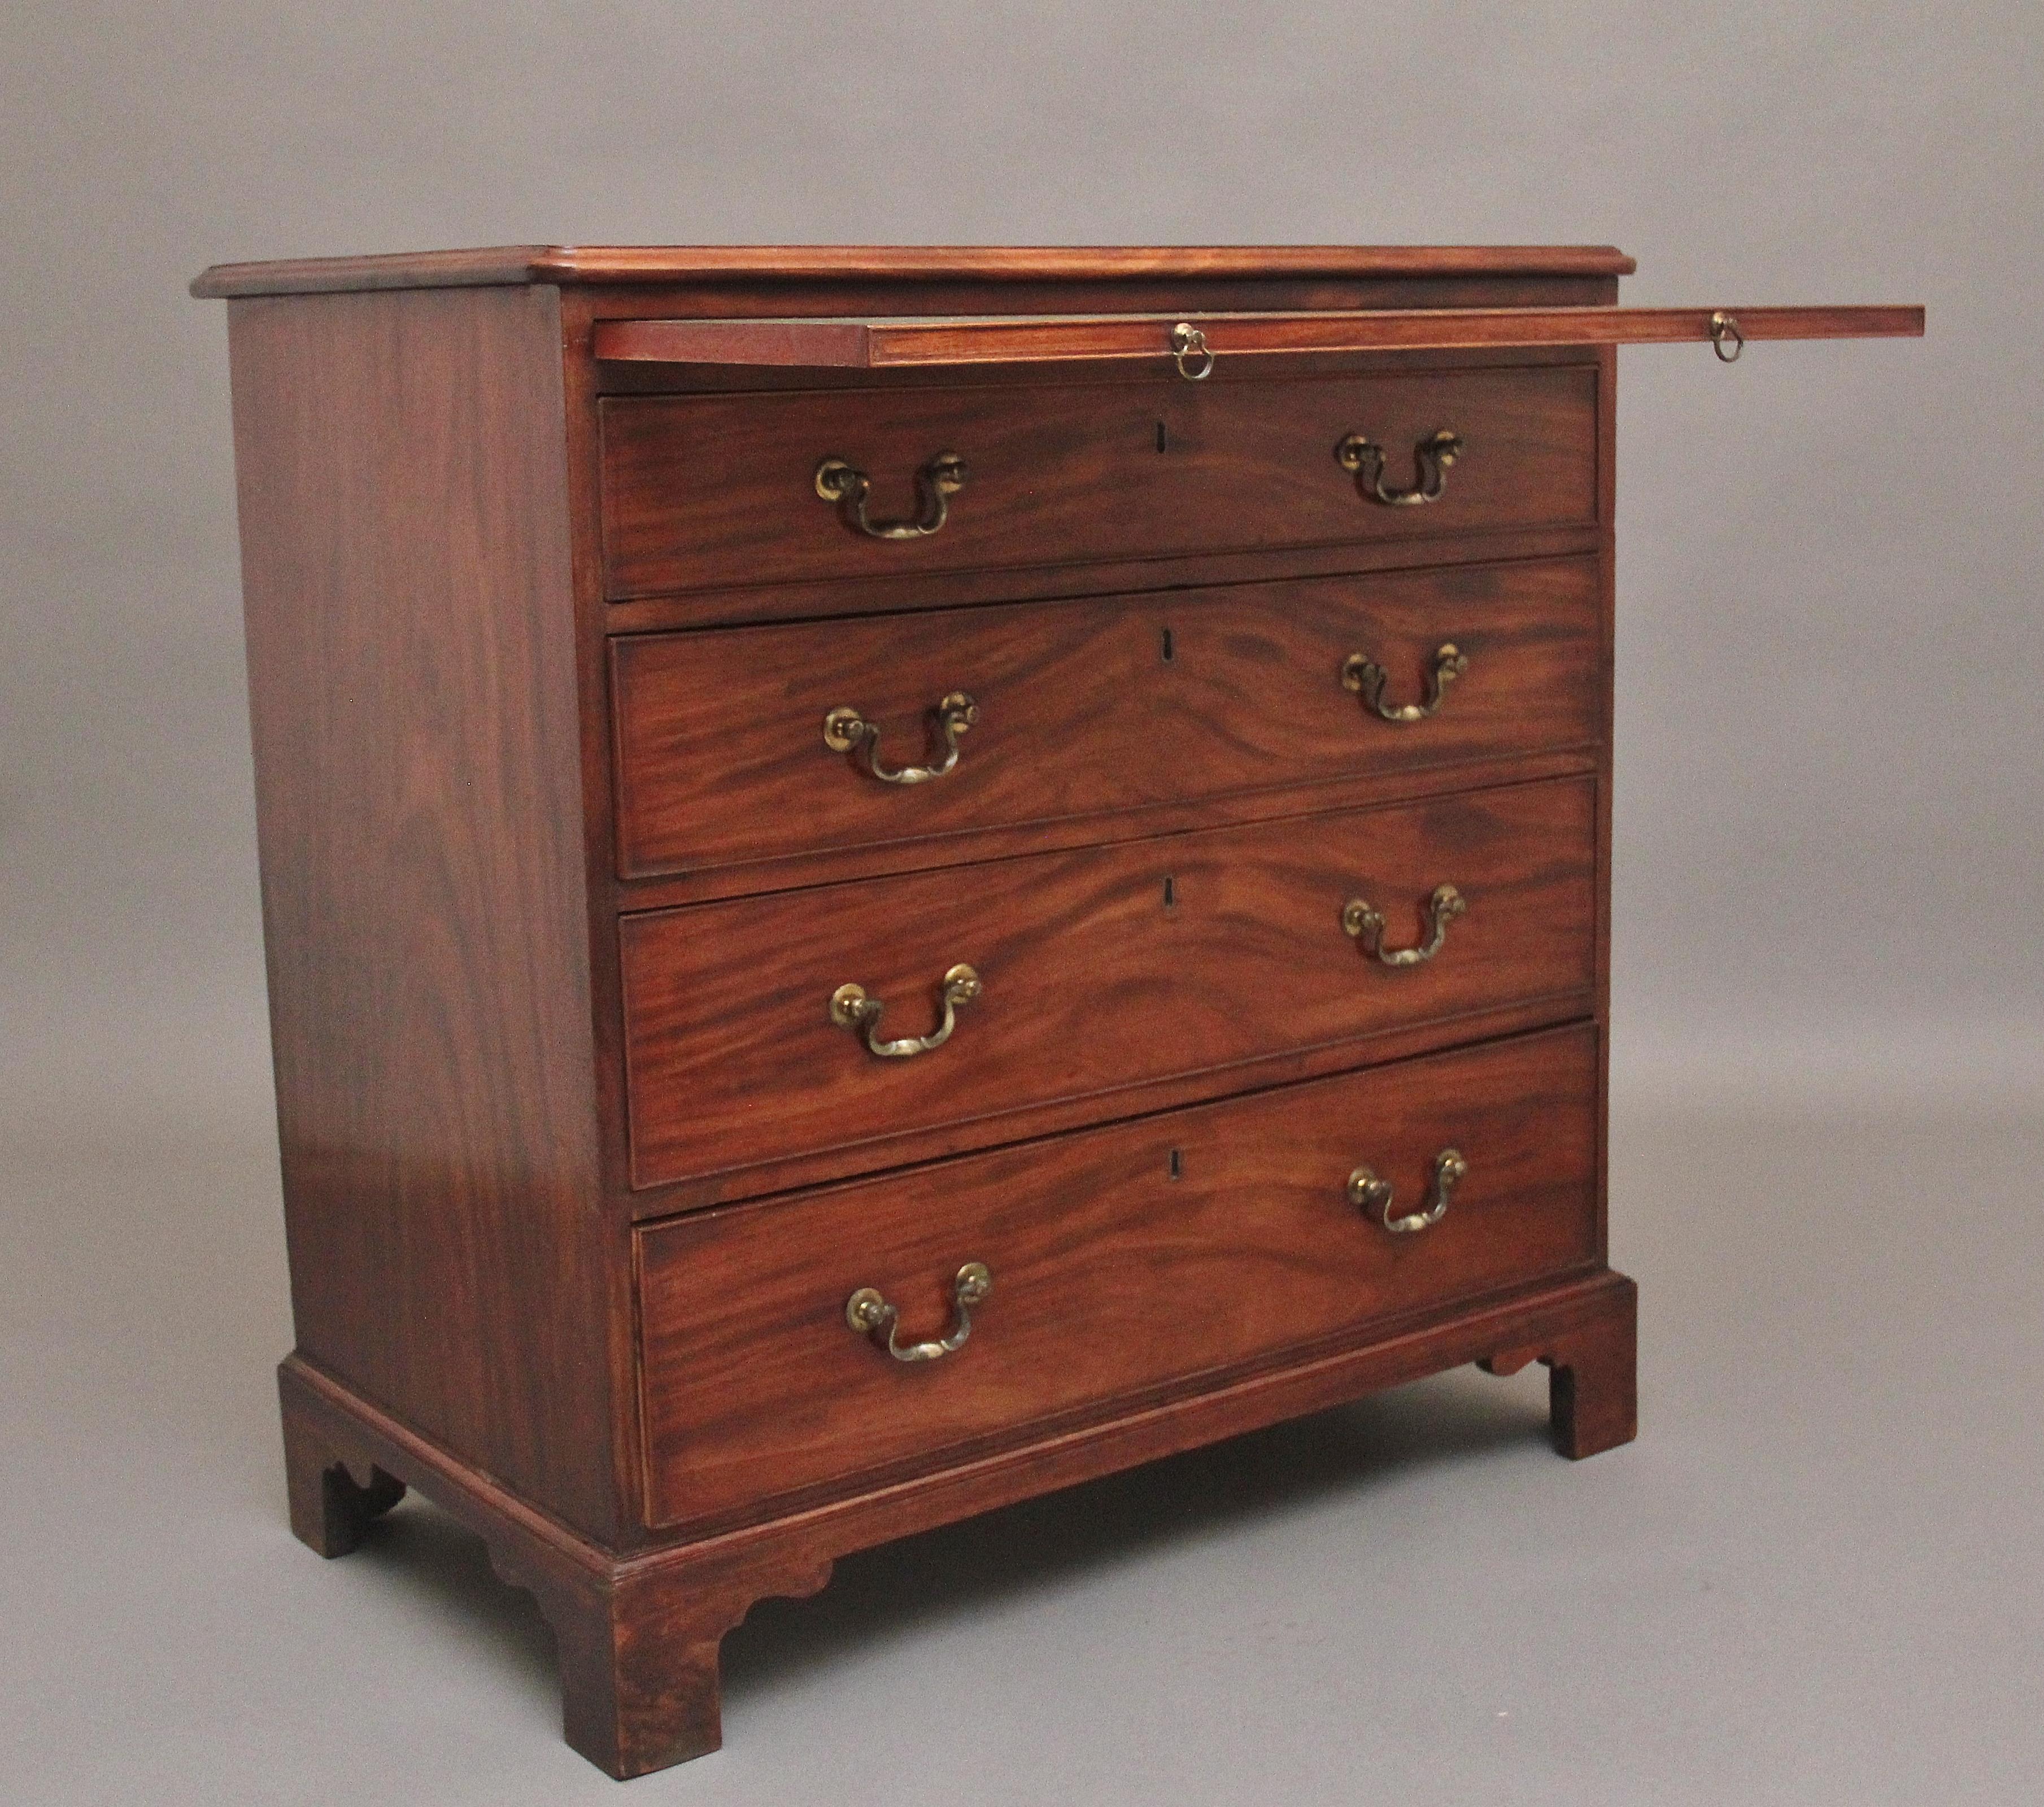 British Superb quality 18th Century mahogany chest of drawers